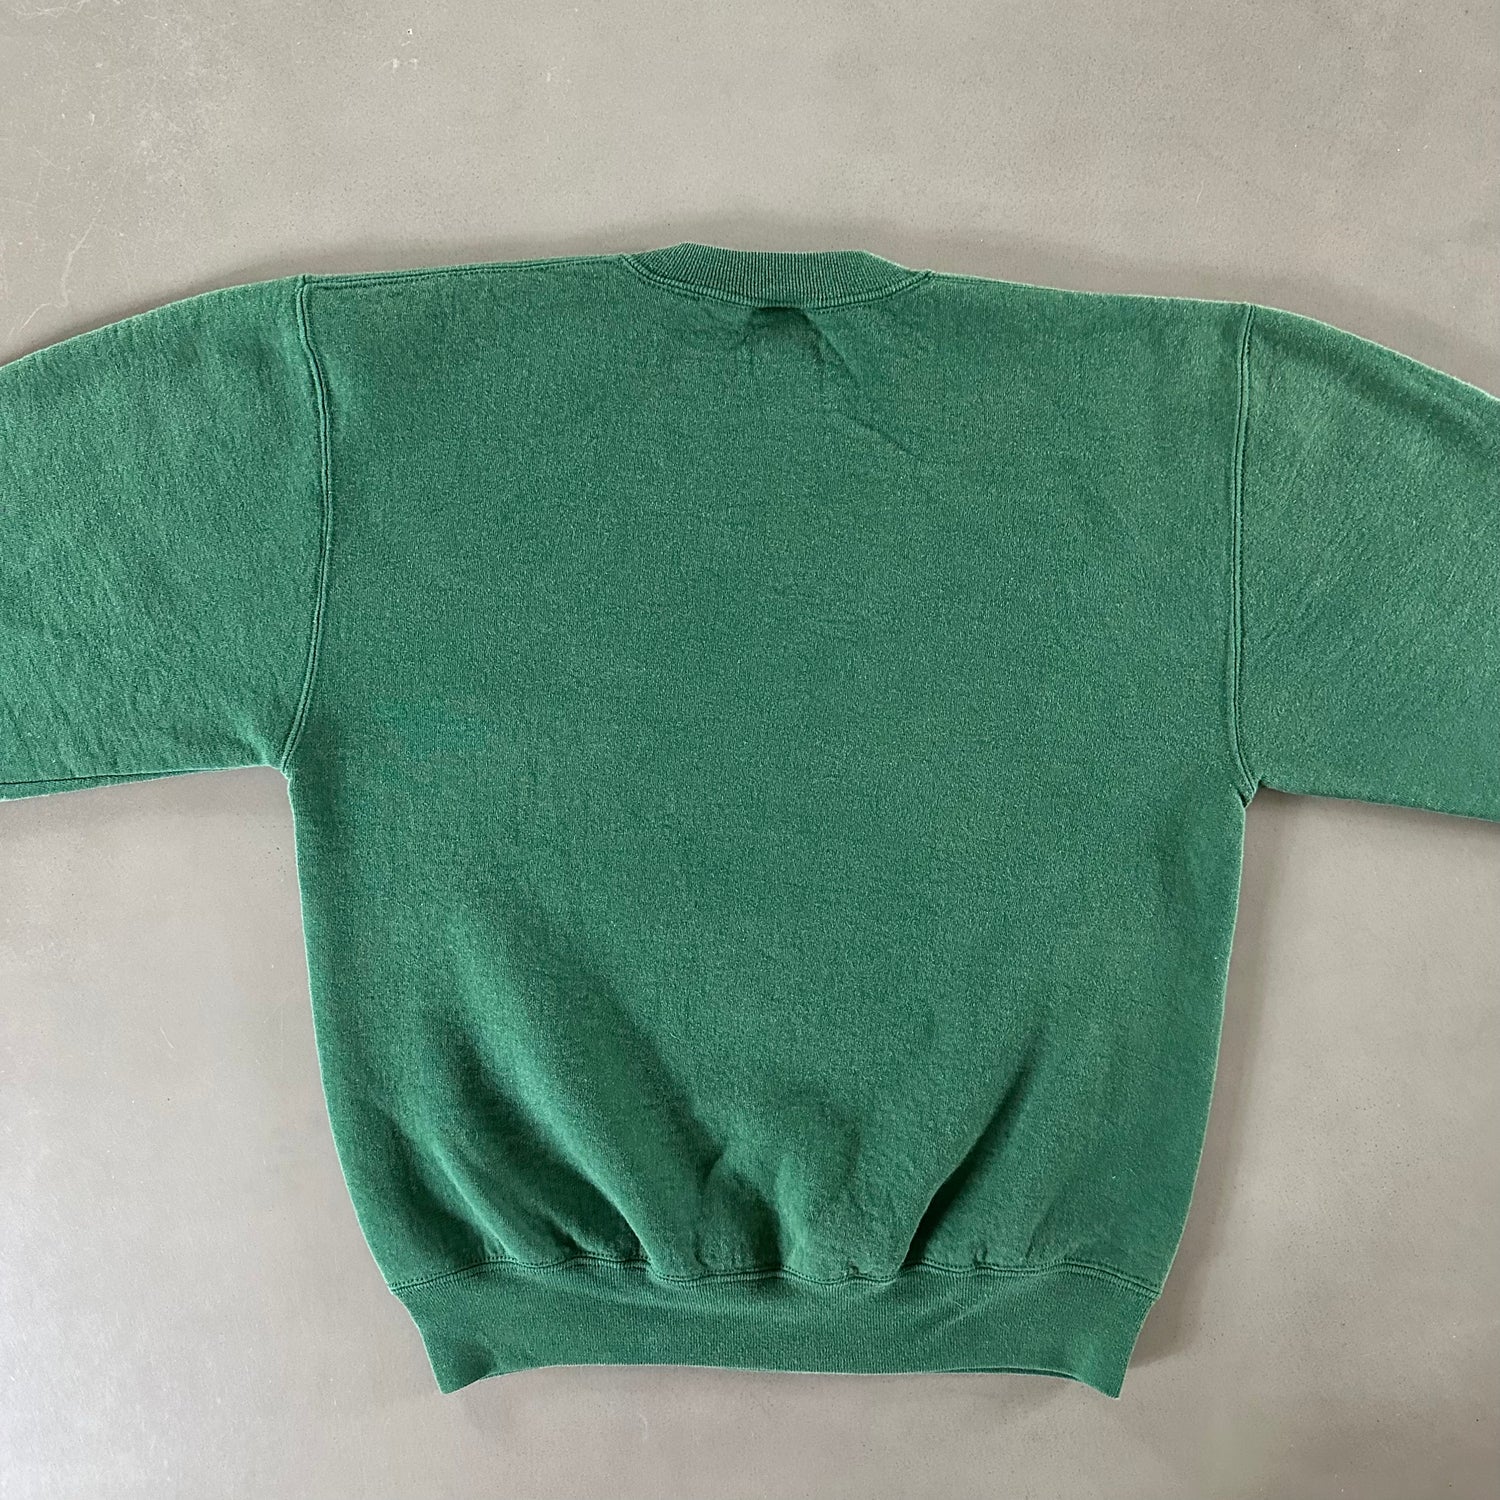 Vintage 1990s Alpha Delta Pi Sweatshirt size Medium